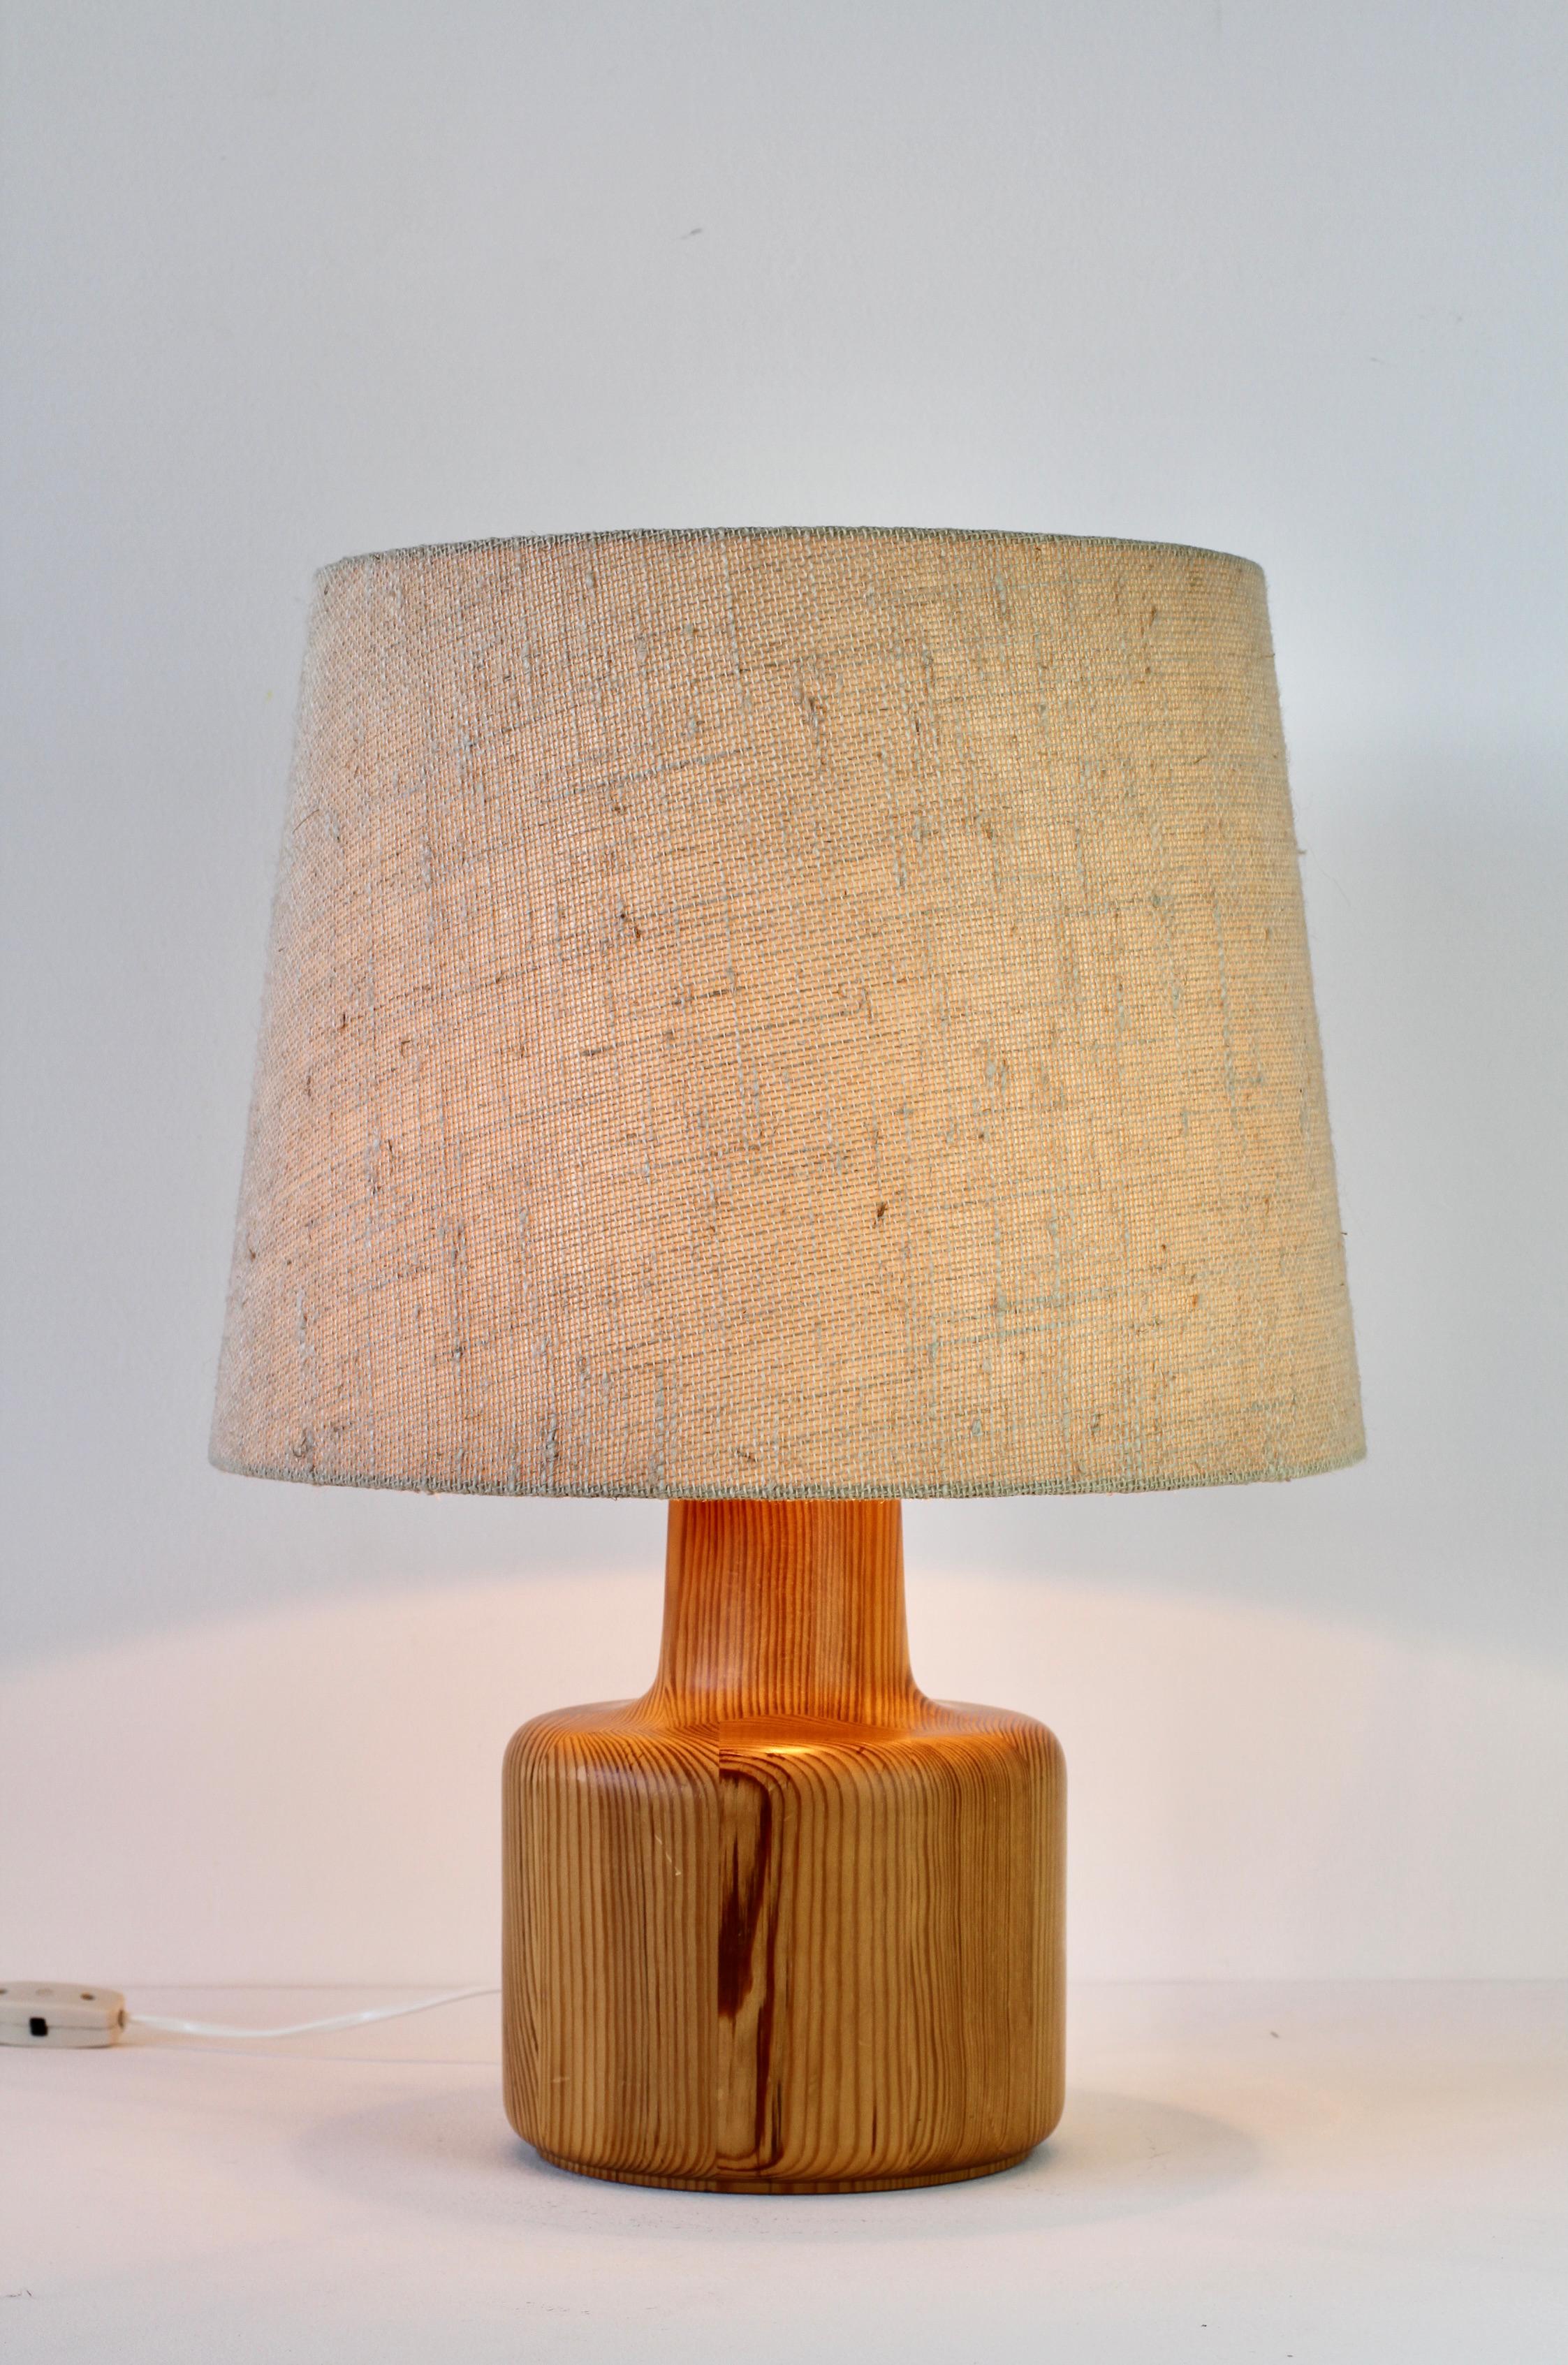 1970s Large Scandinavian Style Pine Wood Table Light Lamp Original Fabric Shade 1